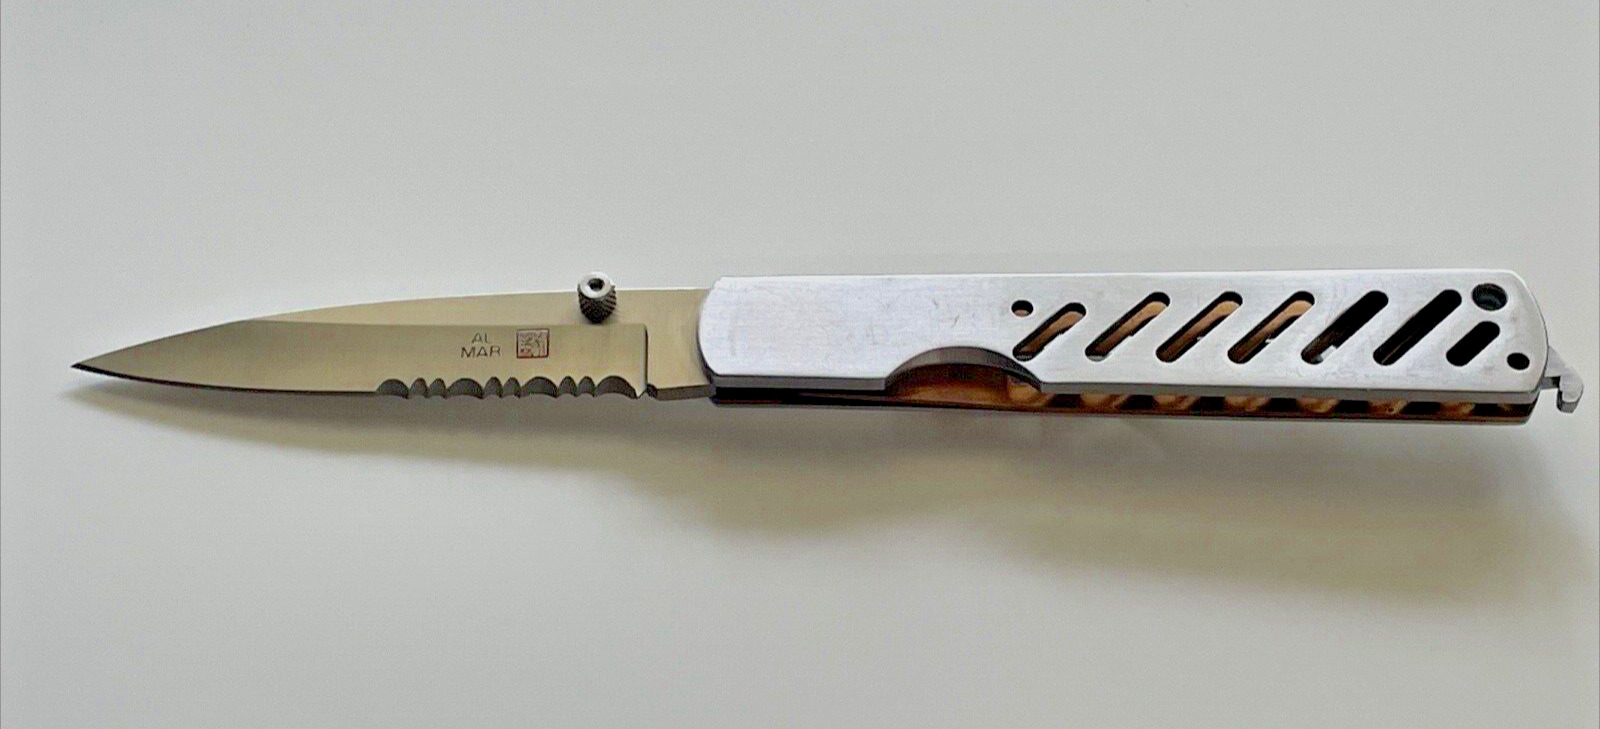 Al Mar 2003 Quicksilver Model 3 Knife Integral Clip Brass Liners Seki-Japan 1989